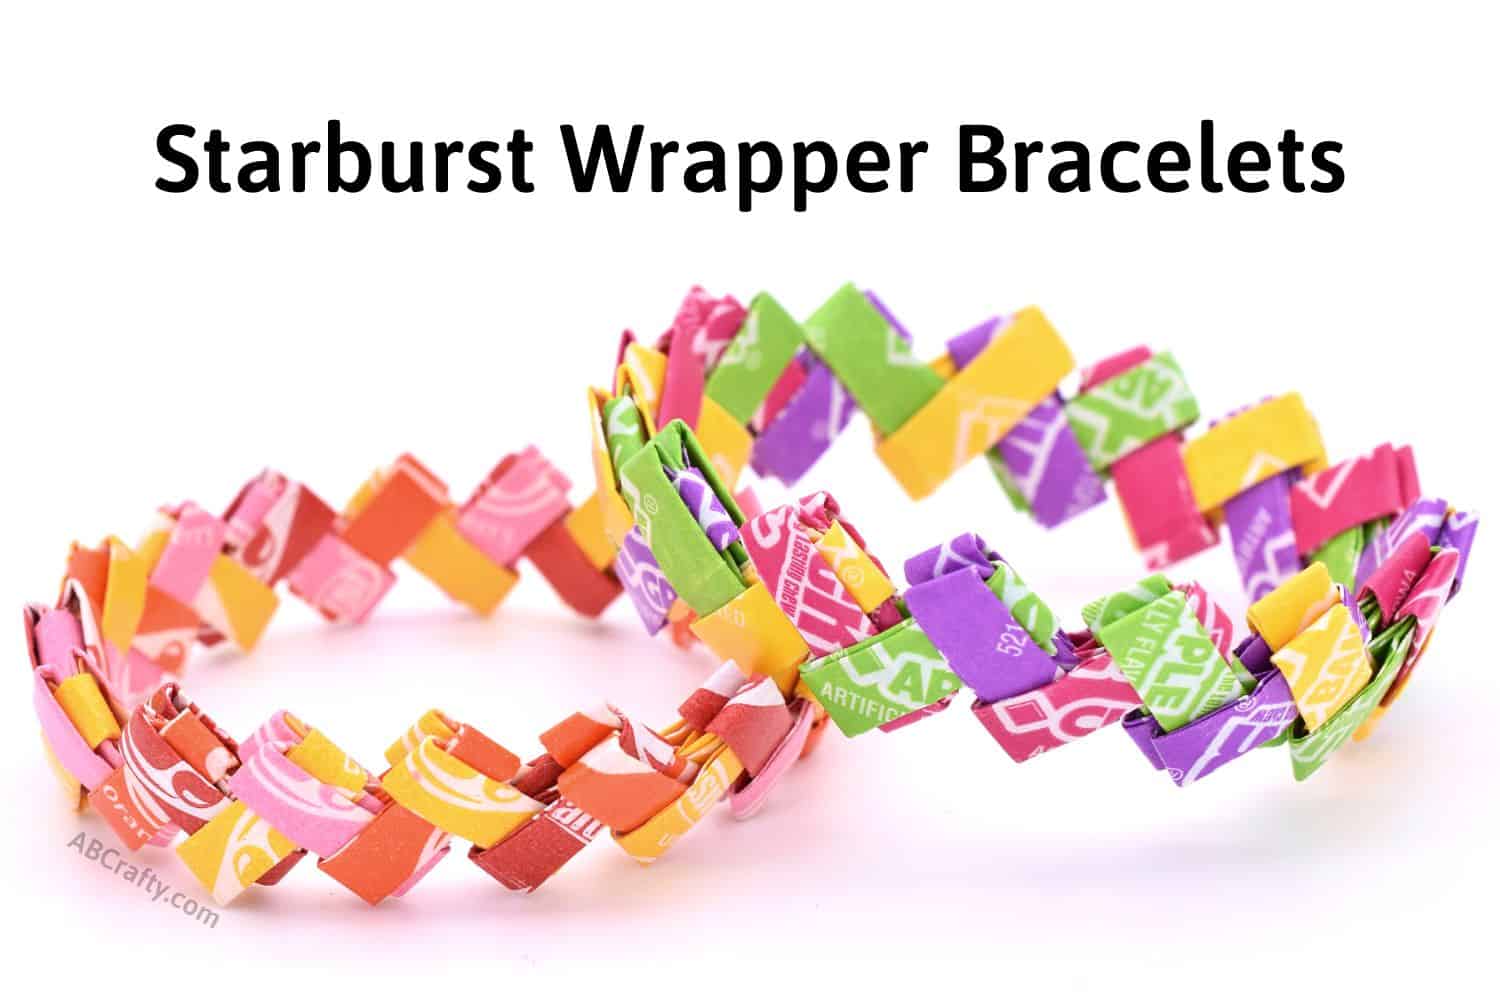 Starburst Wrapper/Magazine/Newspaper Bracelet · A Candy Wrapper Bracelet ·  Weaving on Cut Out + Keep